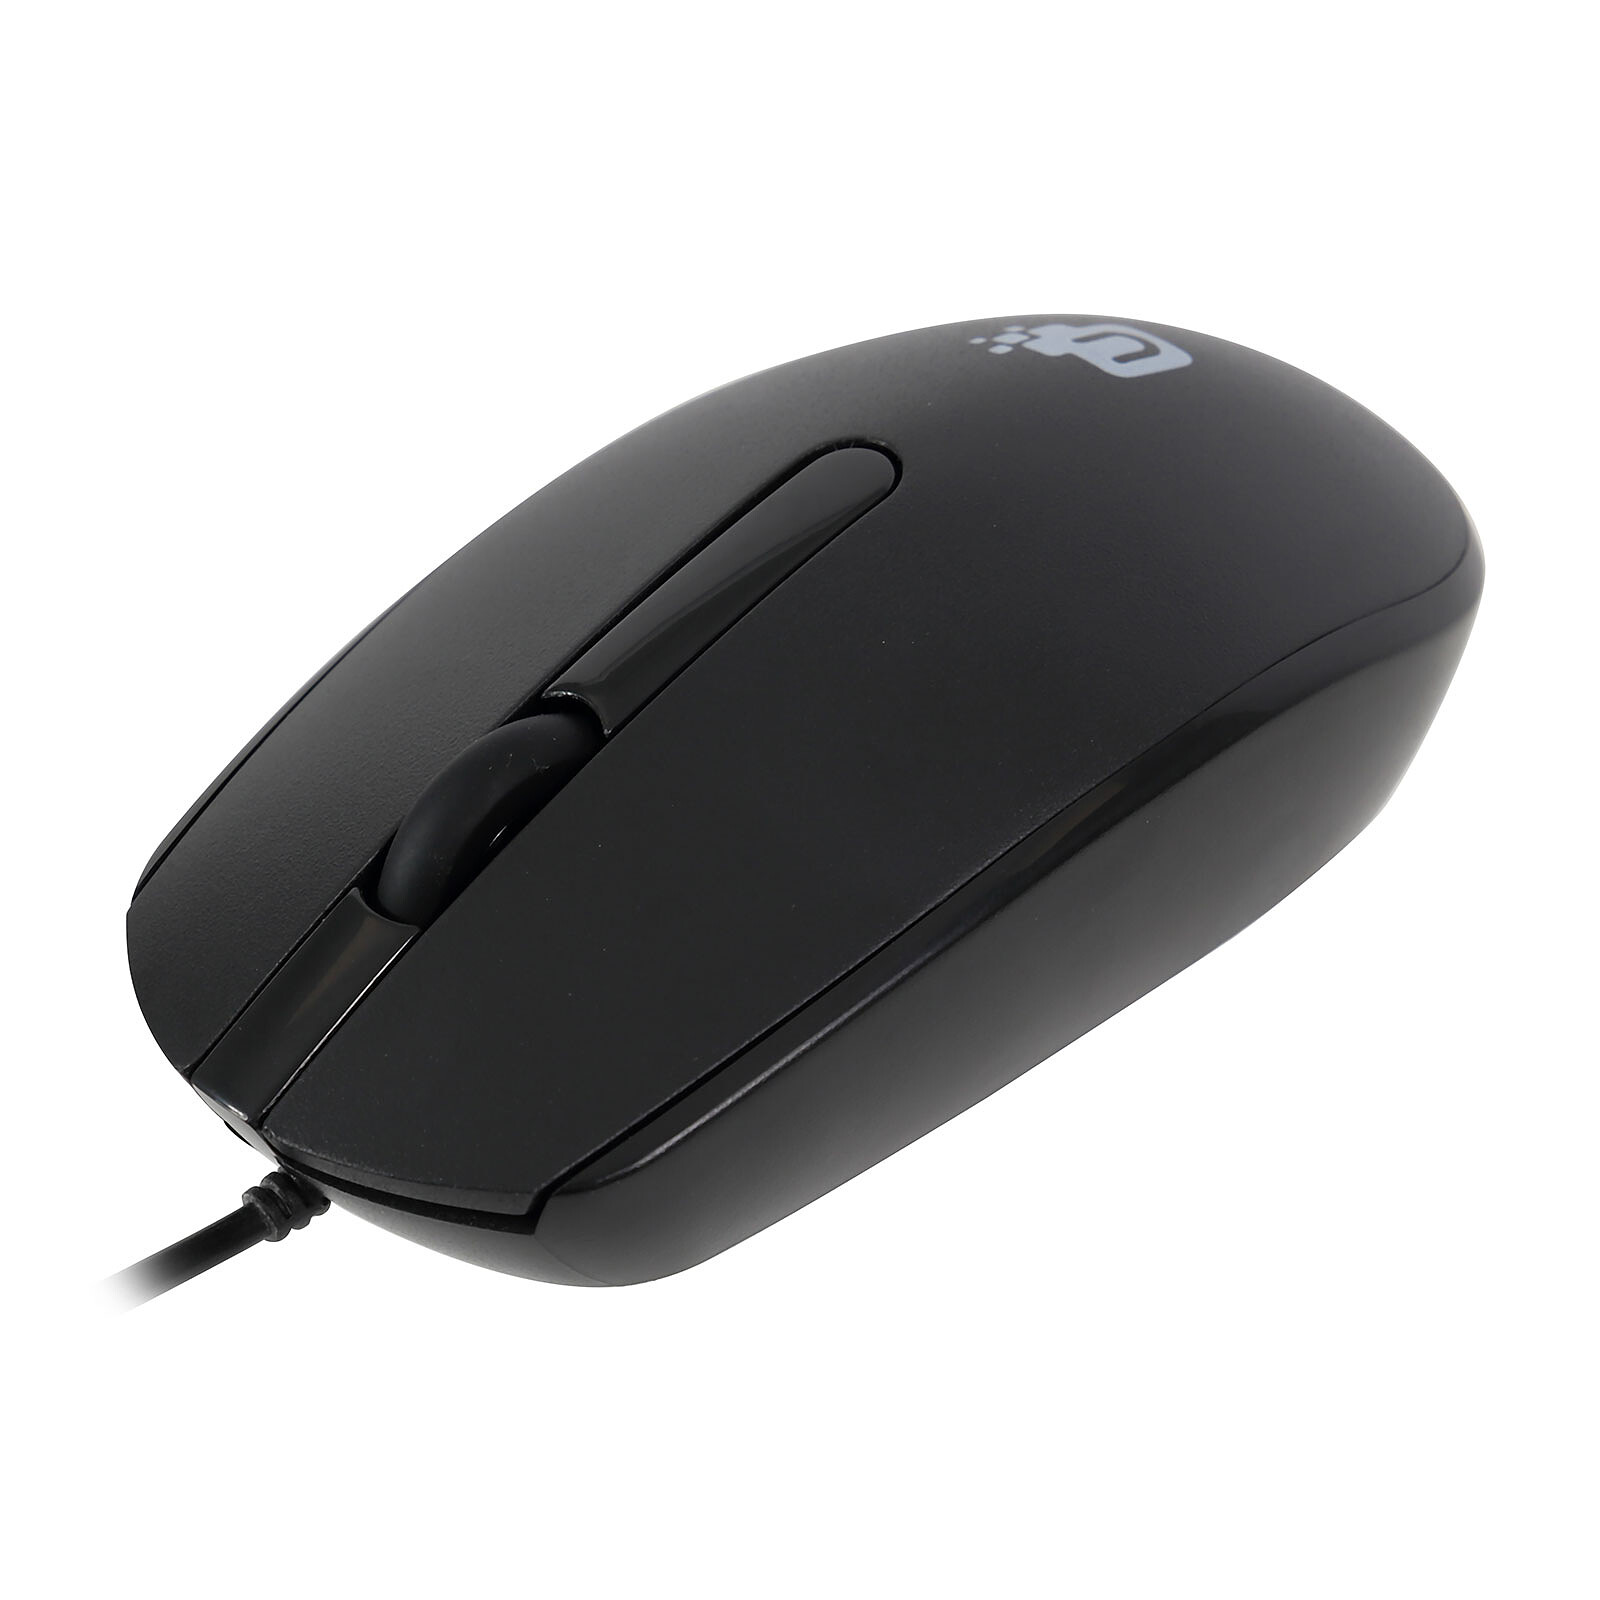 Logitech B100 Optical USB Mouse (Negro) - Ratón PC - LDLC